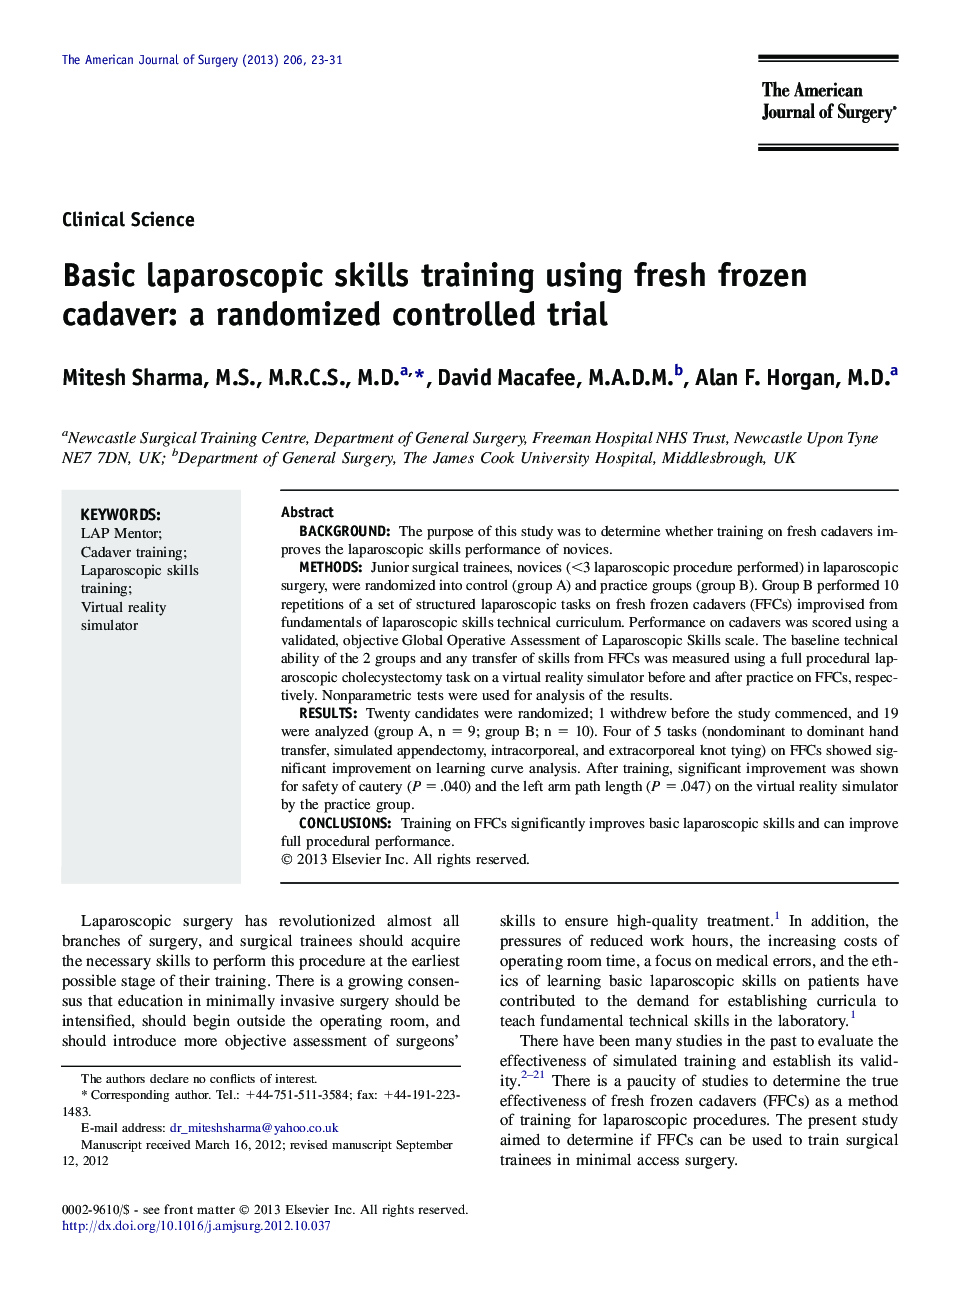 Basic laparoscopic skills training using fresh frozen cadaver: a randomized controlled trial 